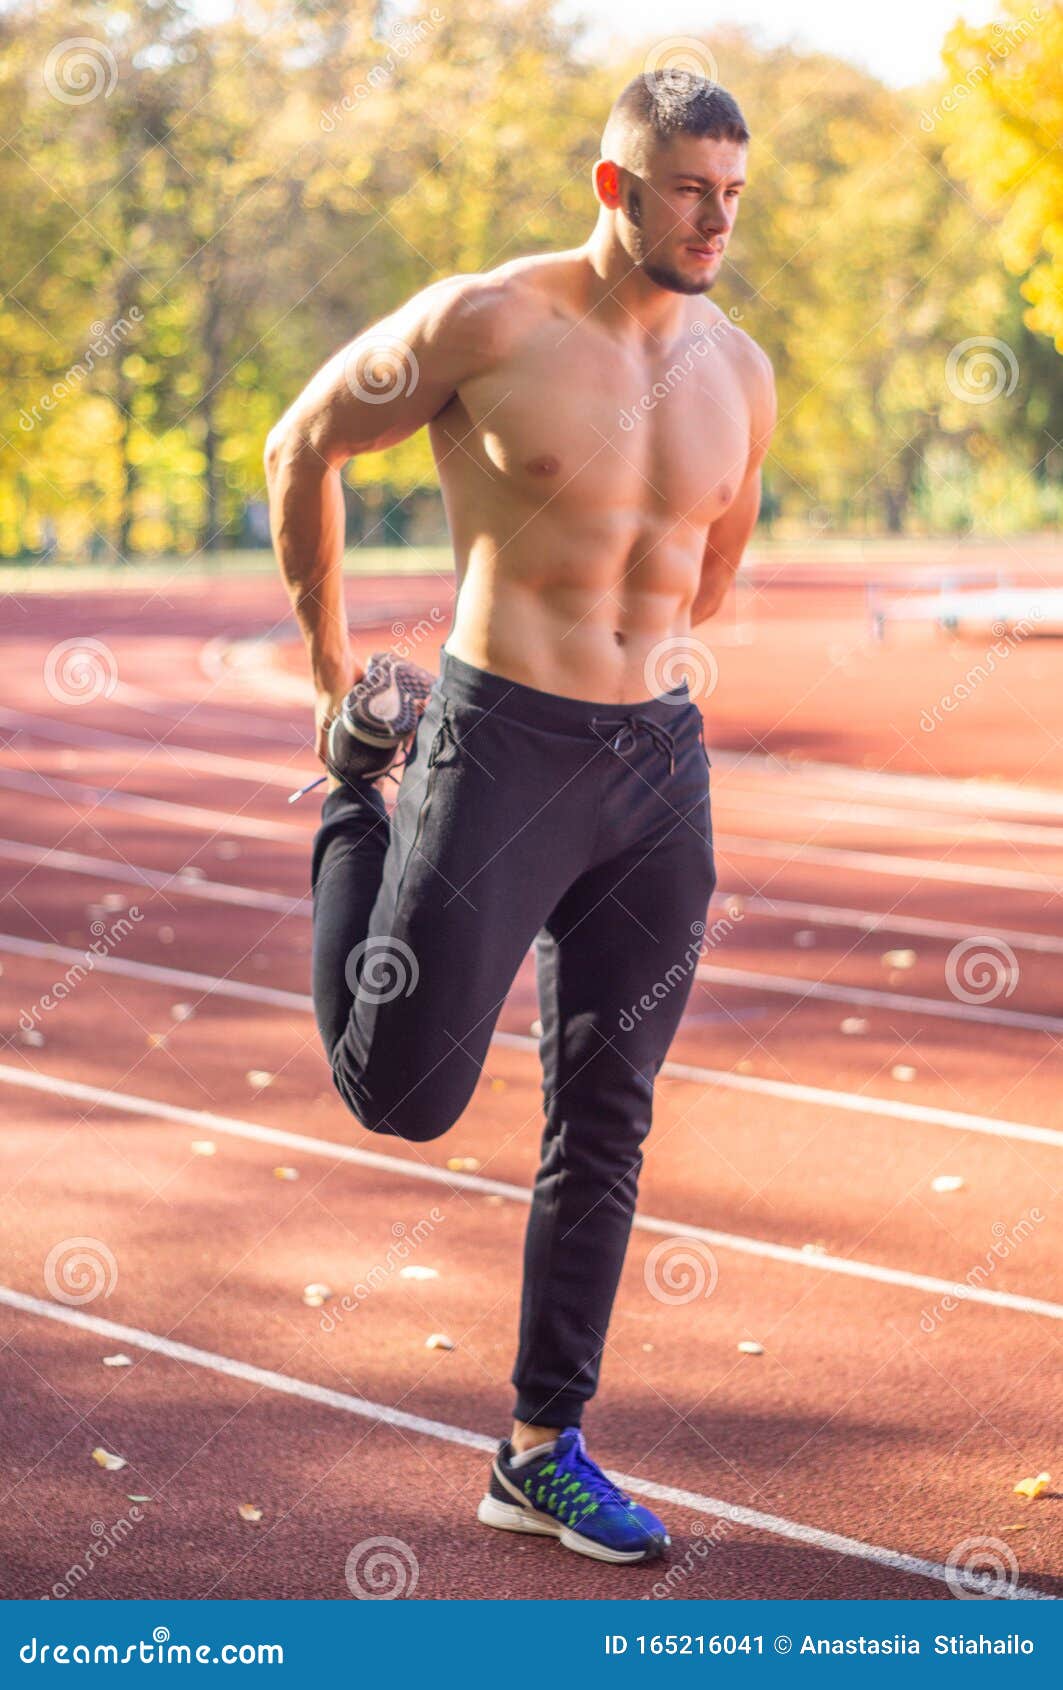 https://thumbs.dreamstime.com/z/male-model-muscular-fit-slim-body-city-stadium-male-model-muscular-fit-slim-body-city-stadium-165216041.jpg